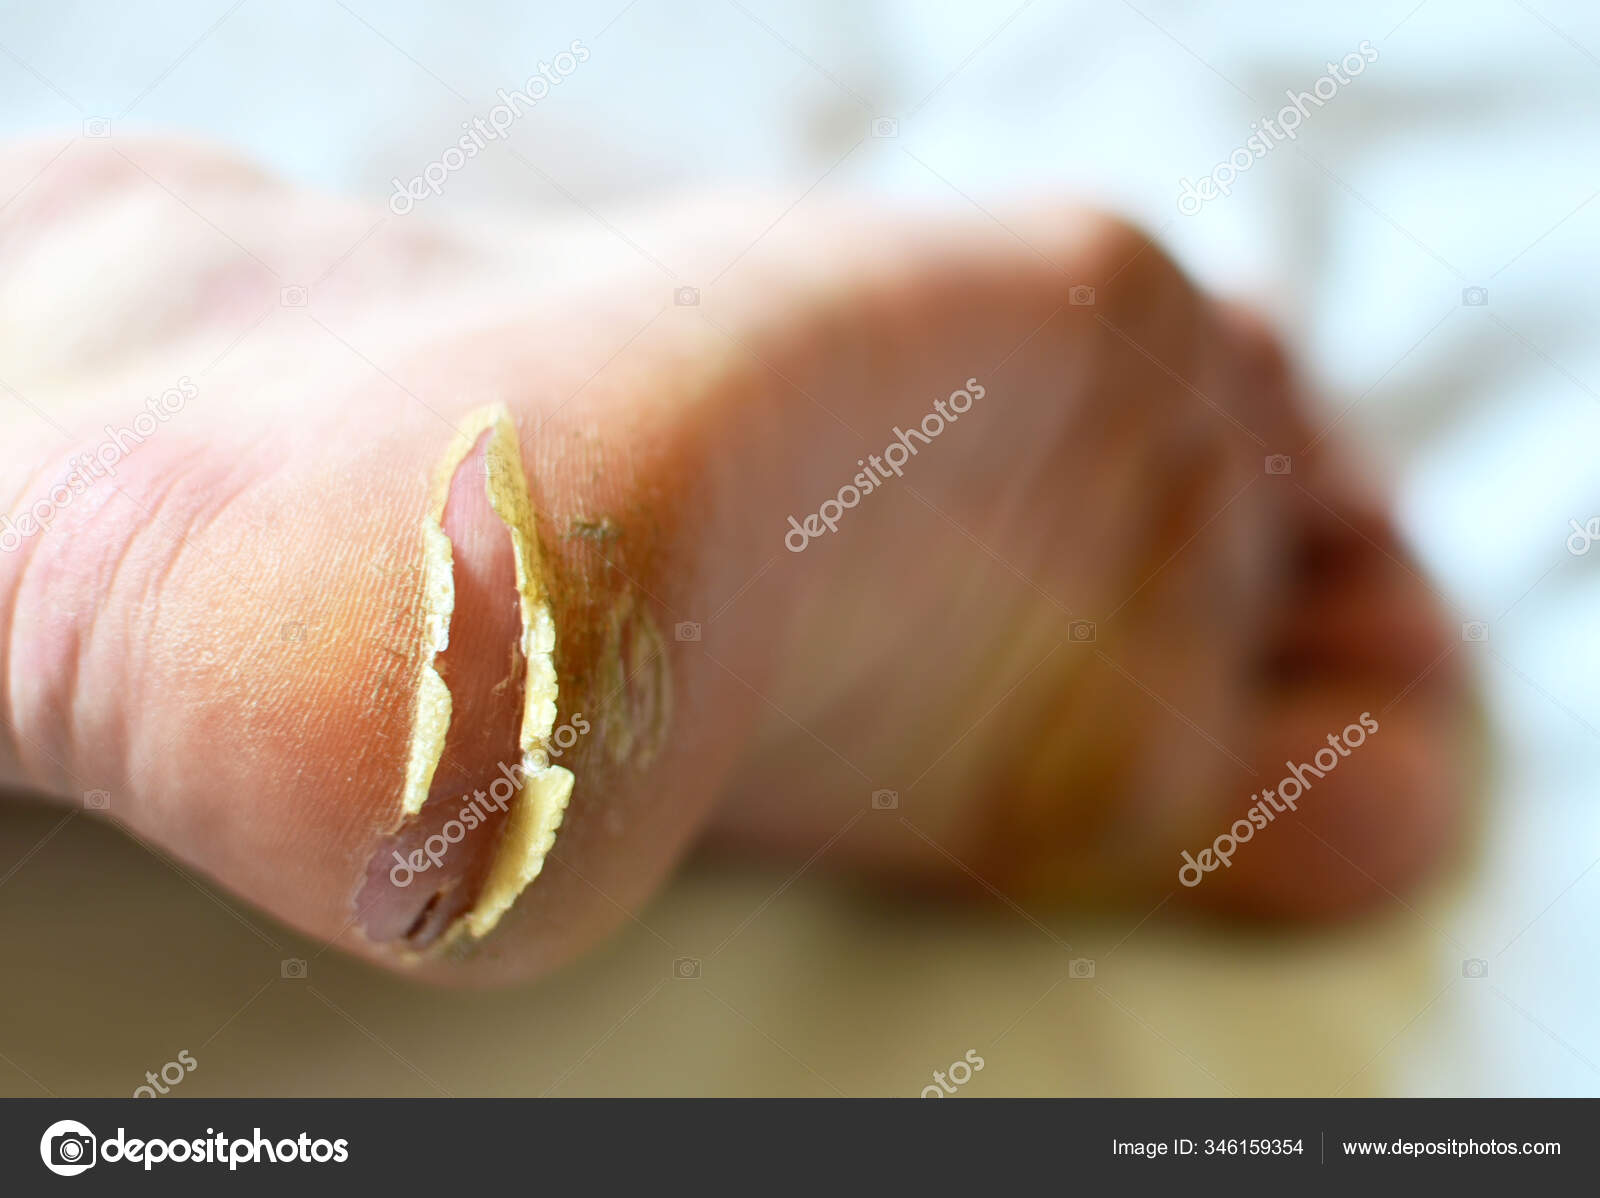 cracked calloused feet